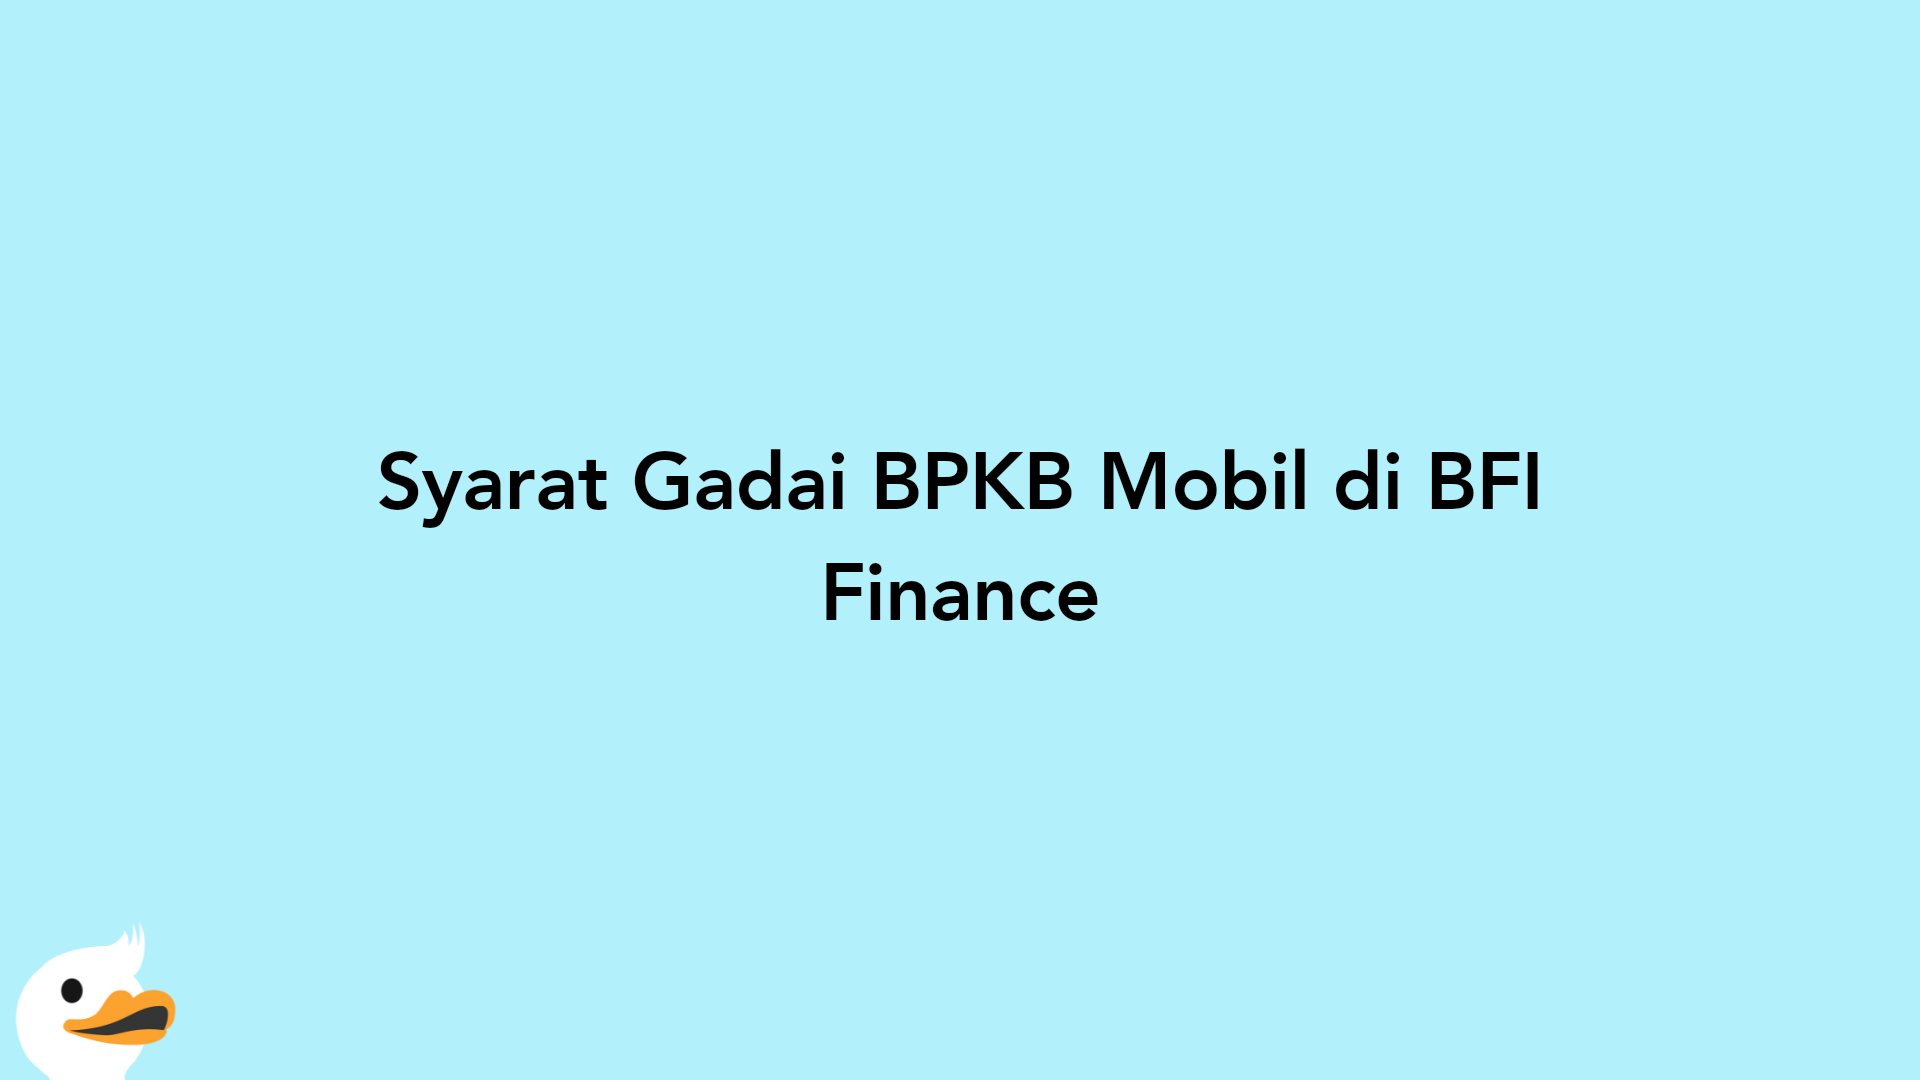 Syarat Gadai BPKB Mobil di BFI Finance